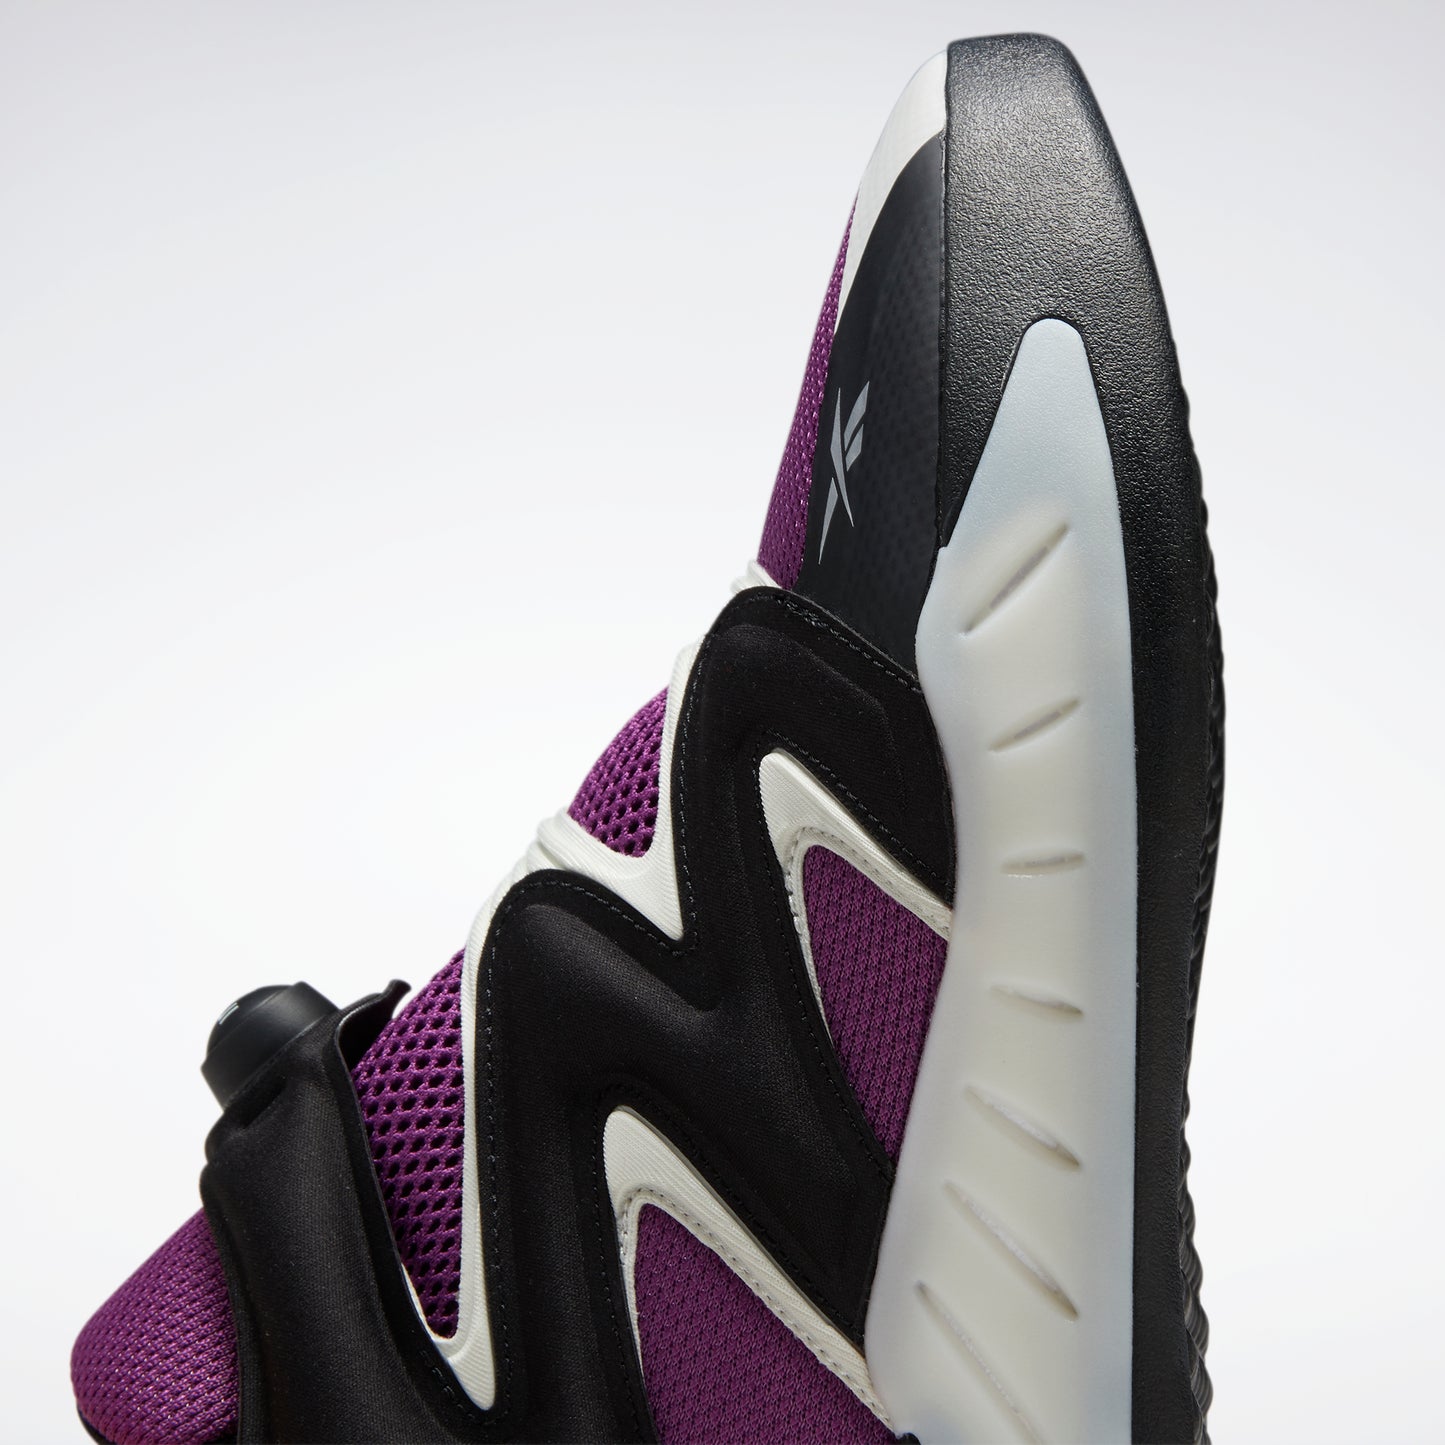 Chaussures Reebok Footwear Hommes Instapump Fury Zone Chaussures Auberg/Purgry/Cblack